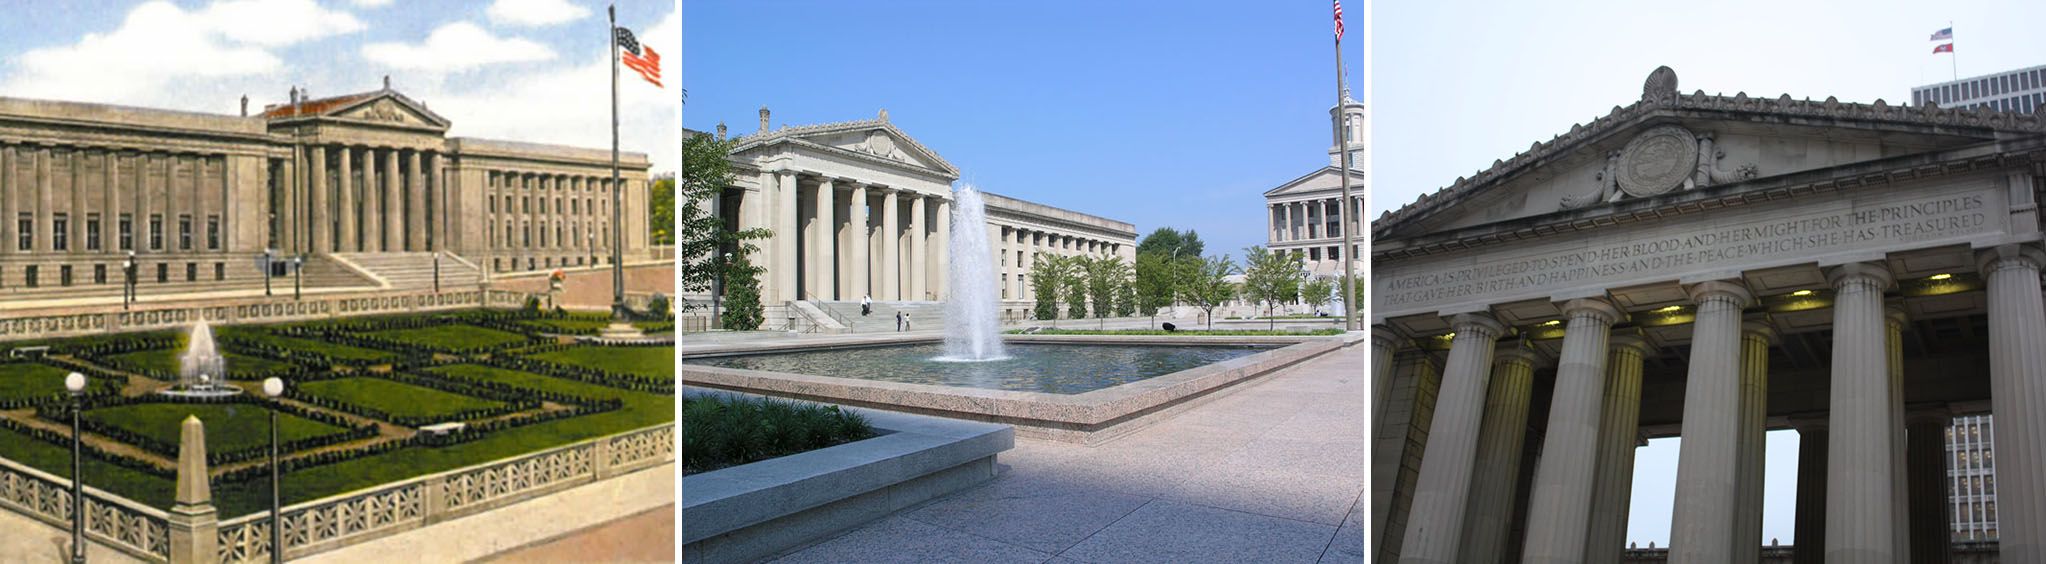 War Memorial Plaza in Nashville